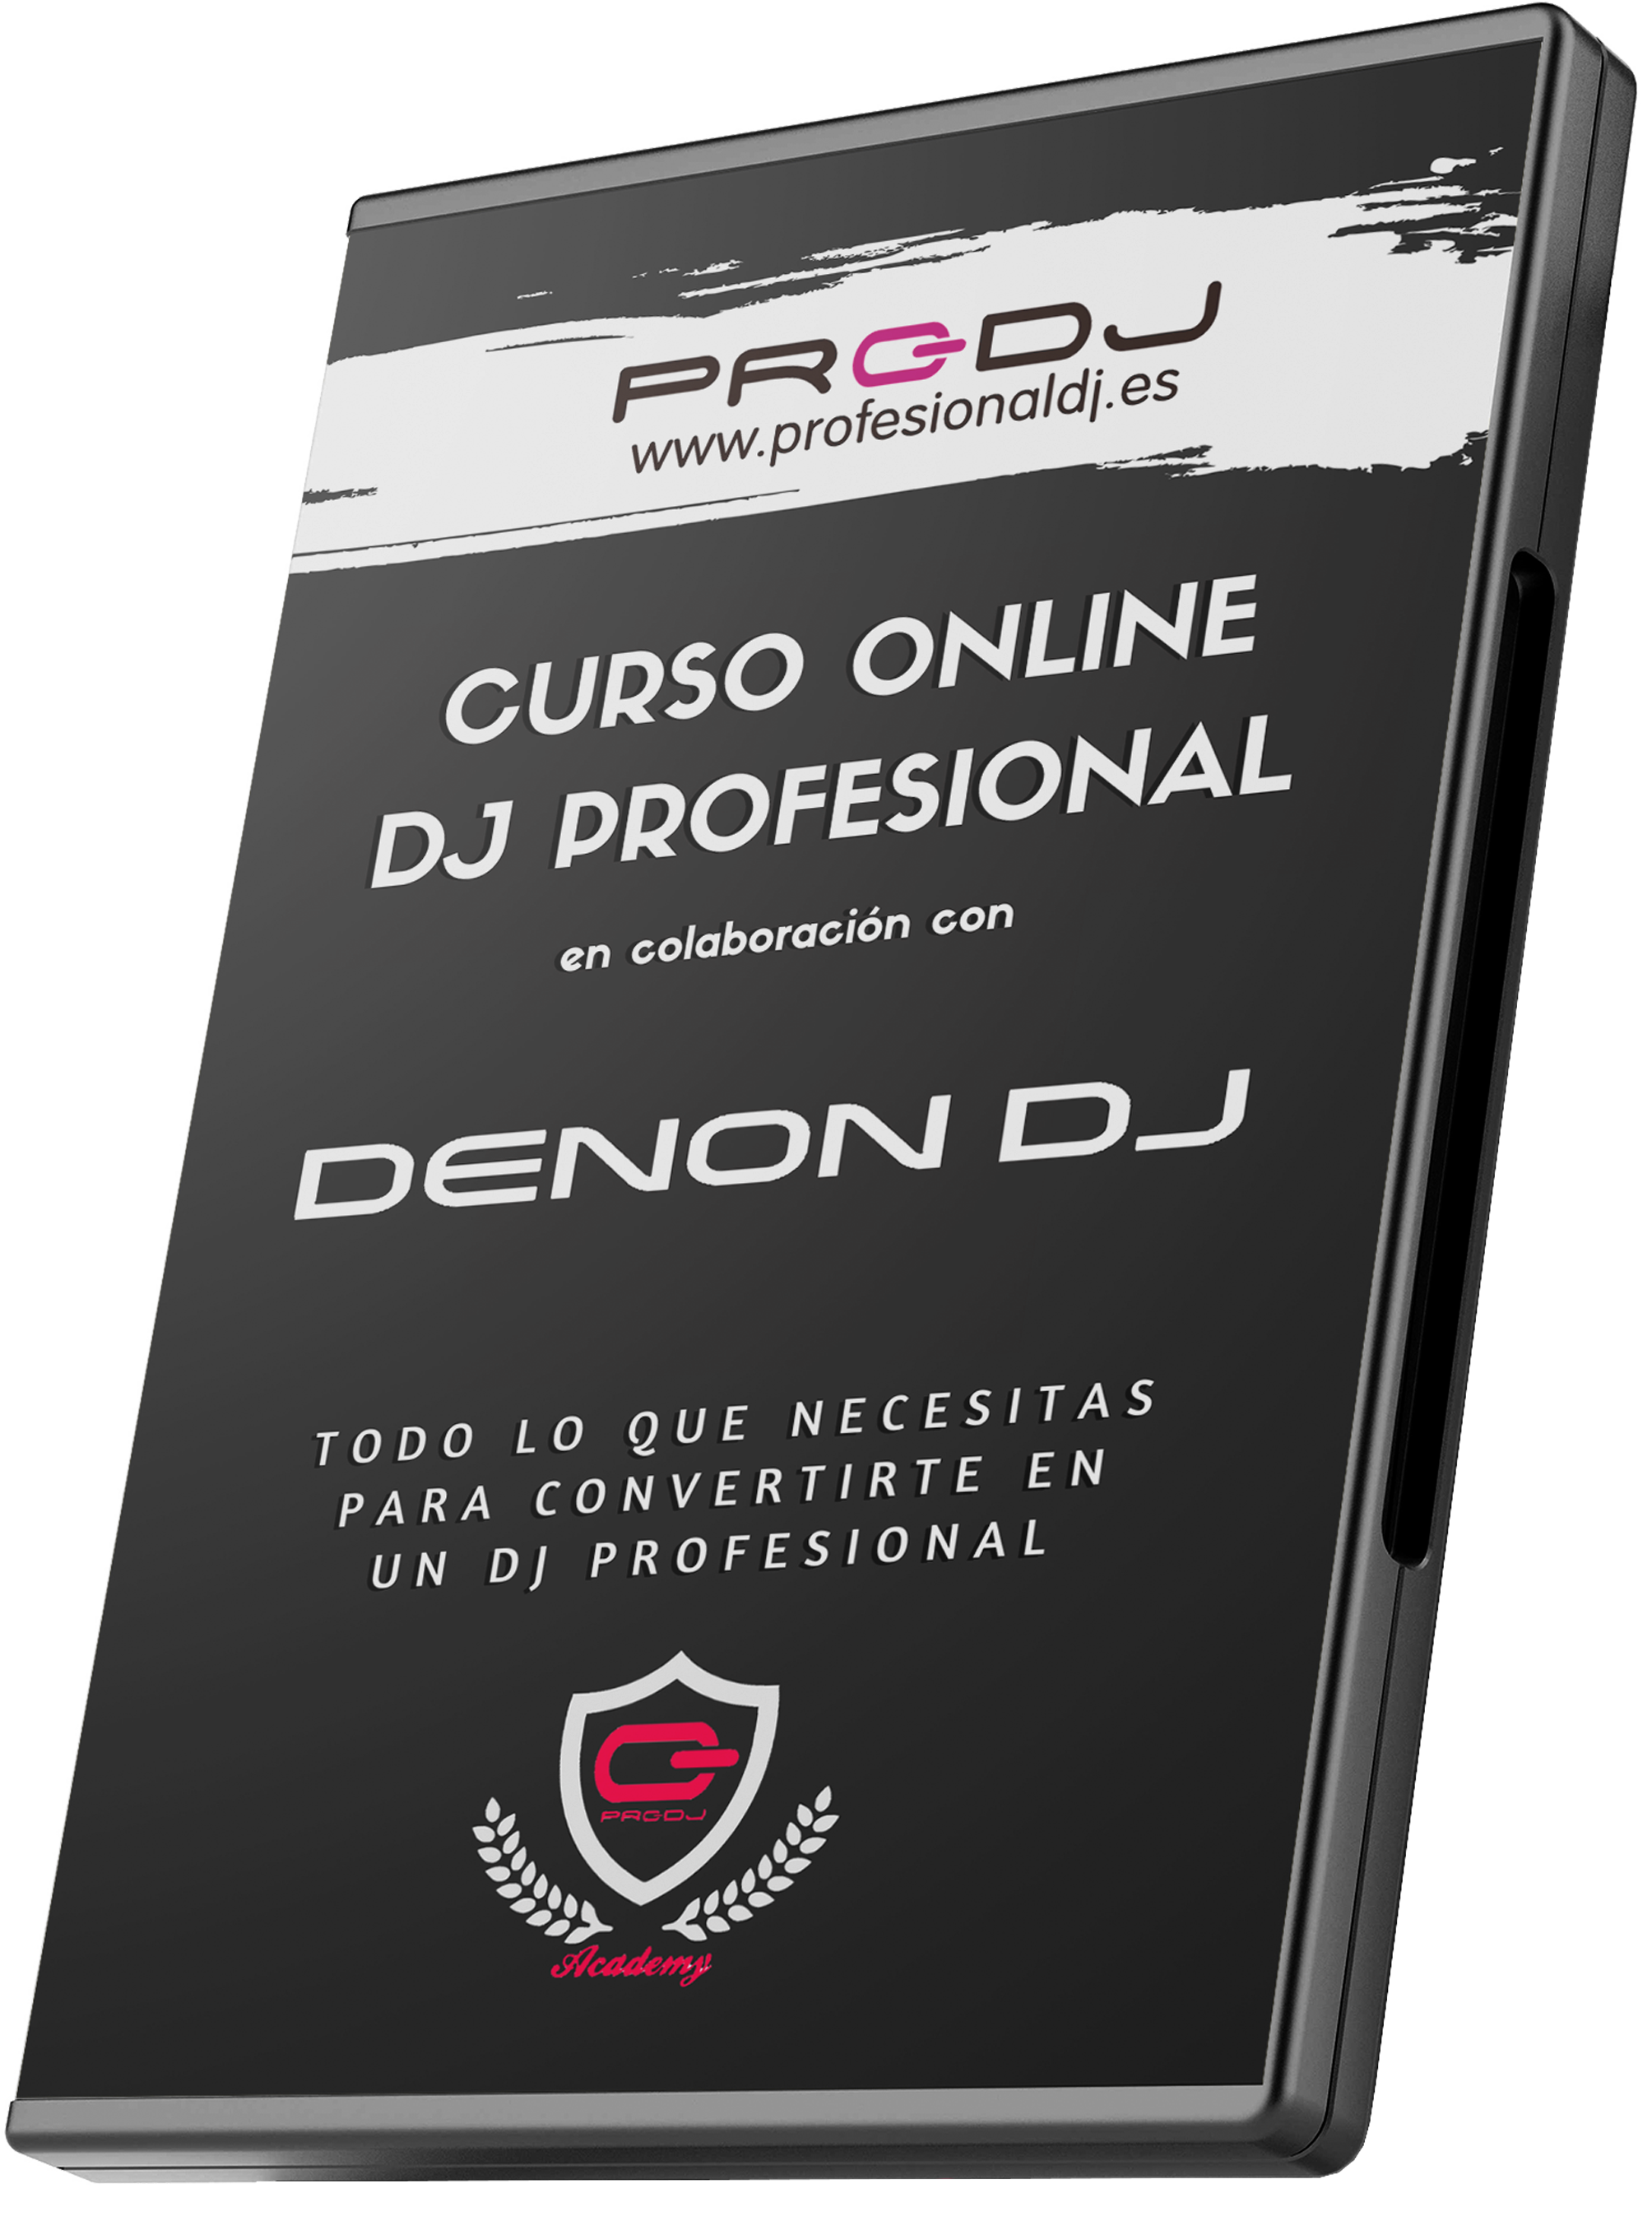 DENON DJ PROFESIONAL